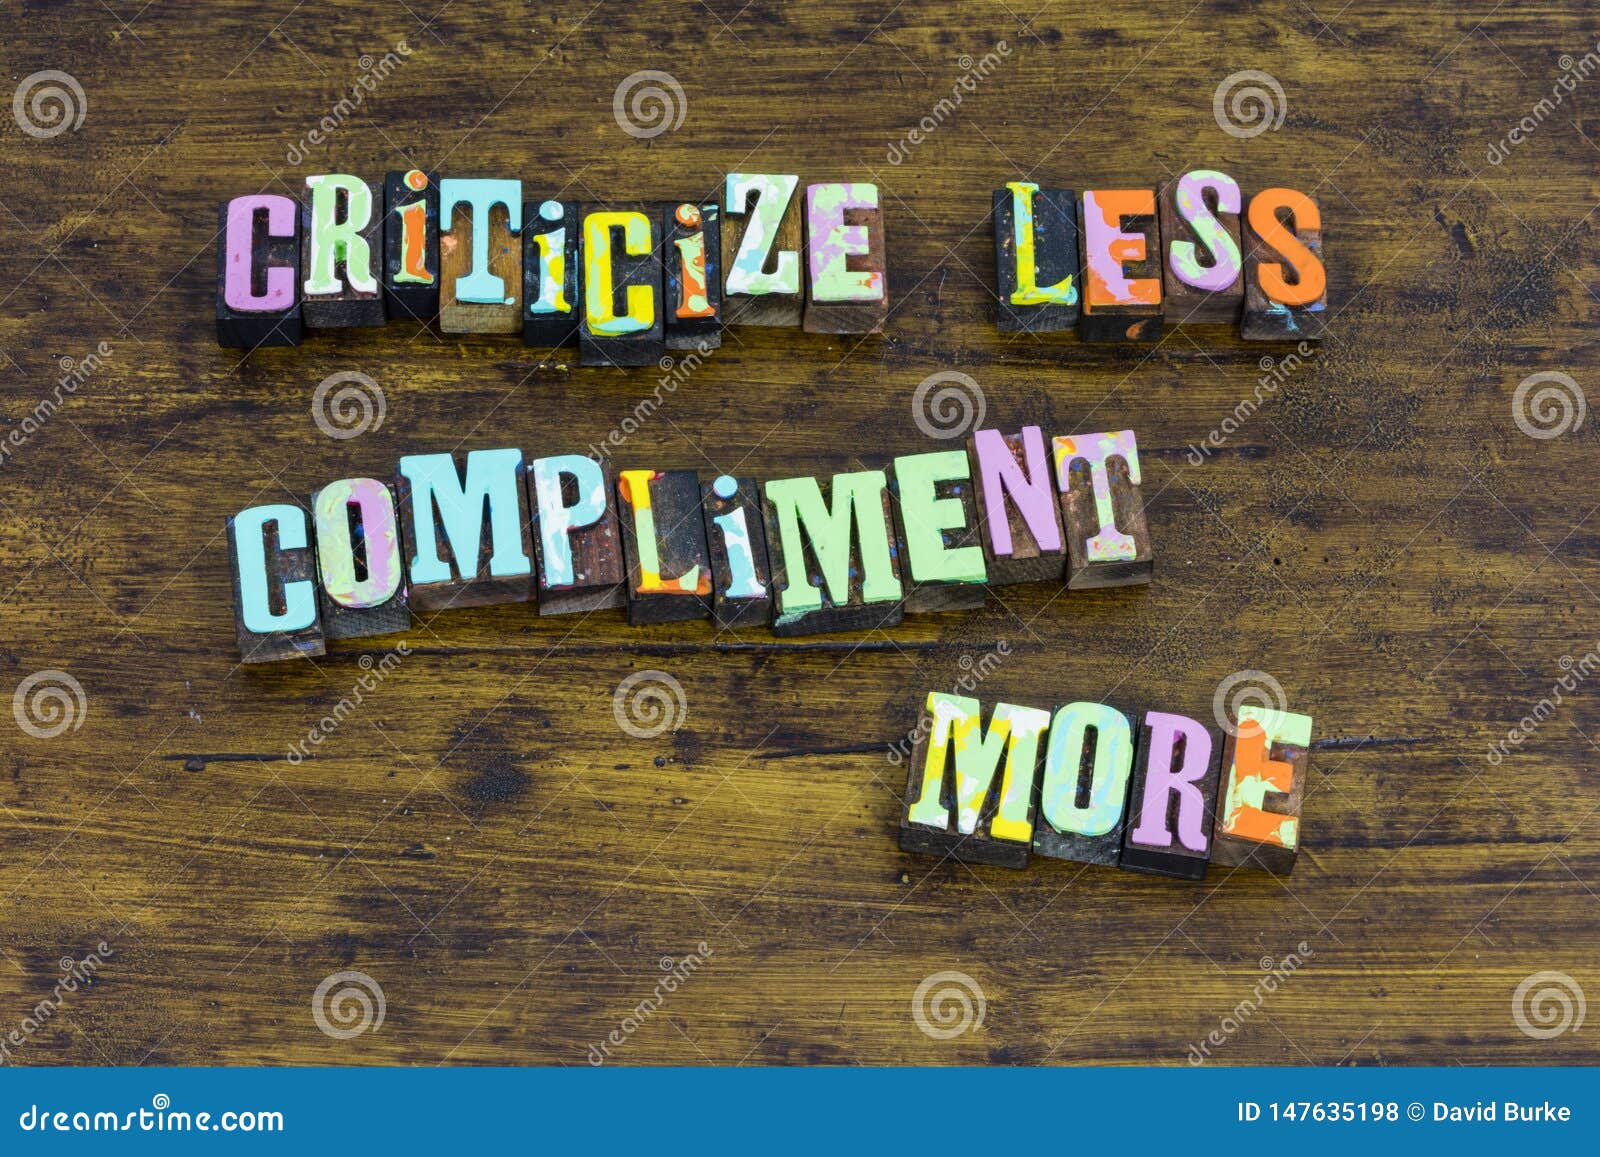 criticize compliment critical help kindness support beauty leadership